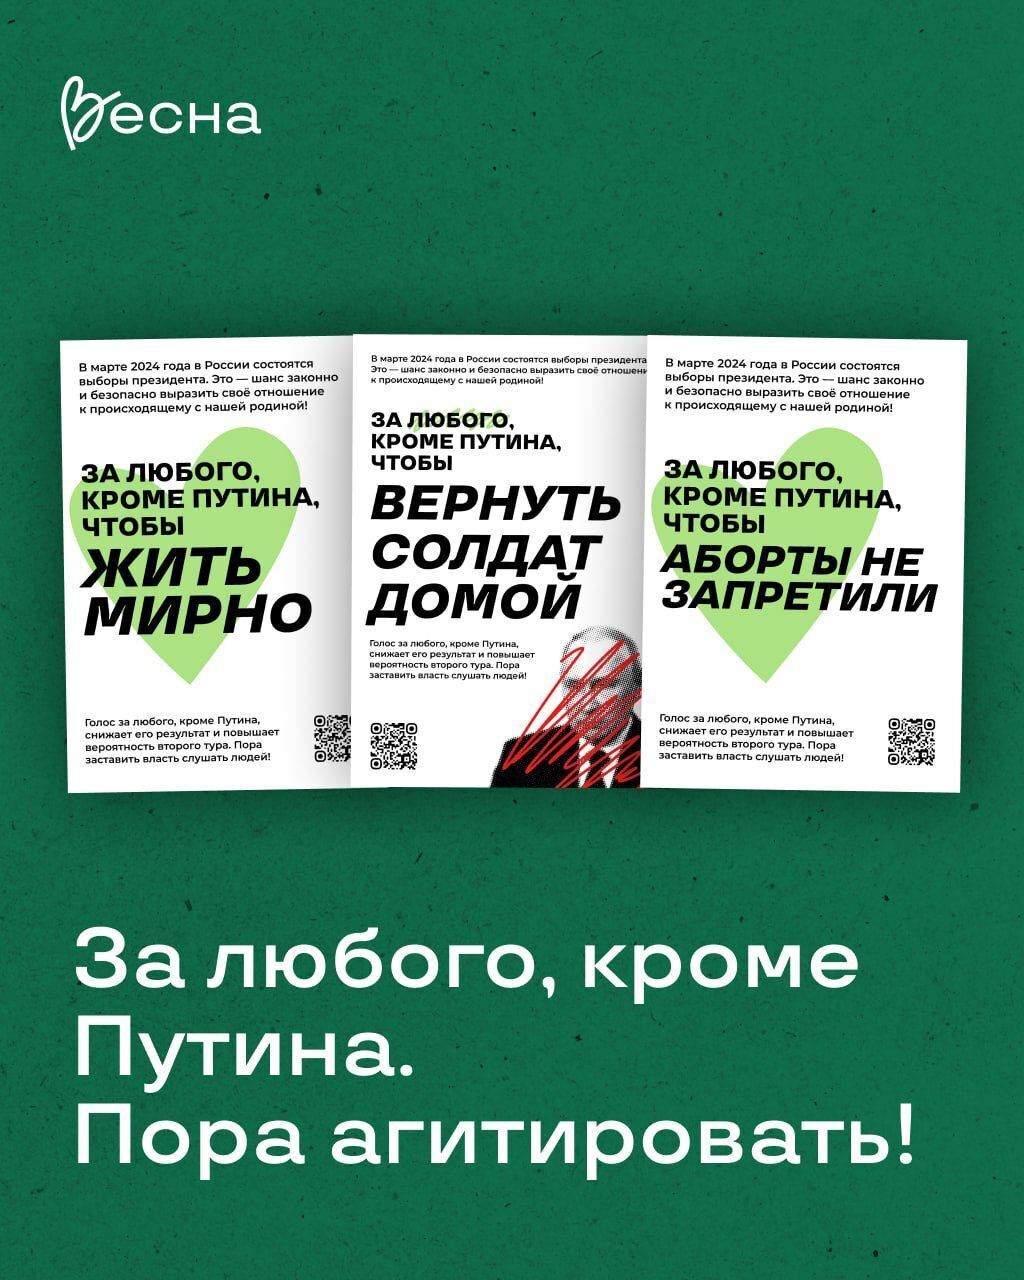 Posters against dictator Vladimir Putin